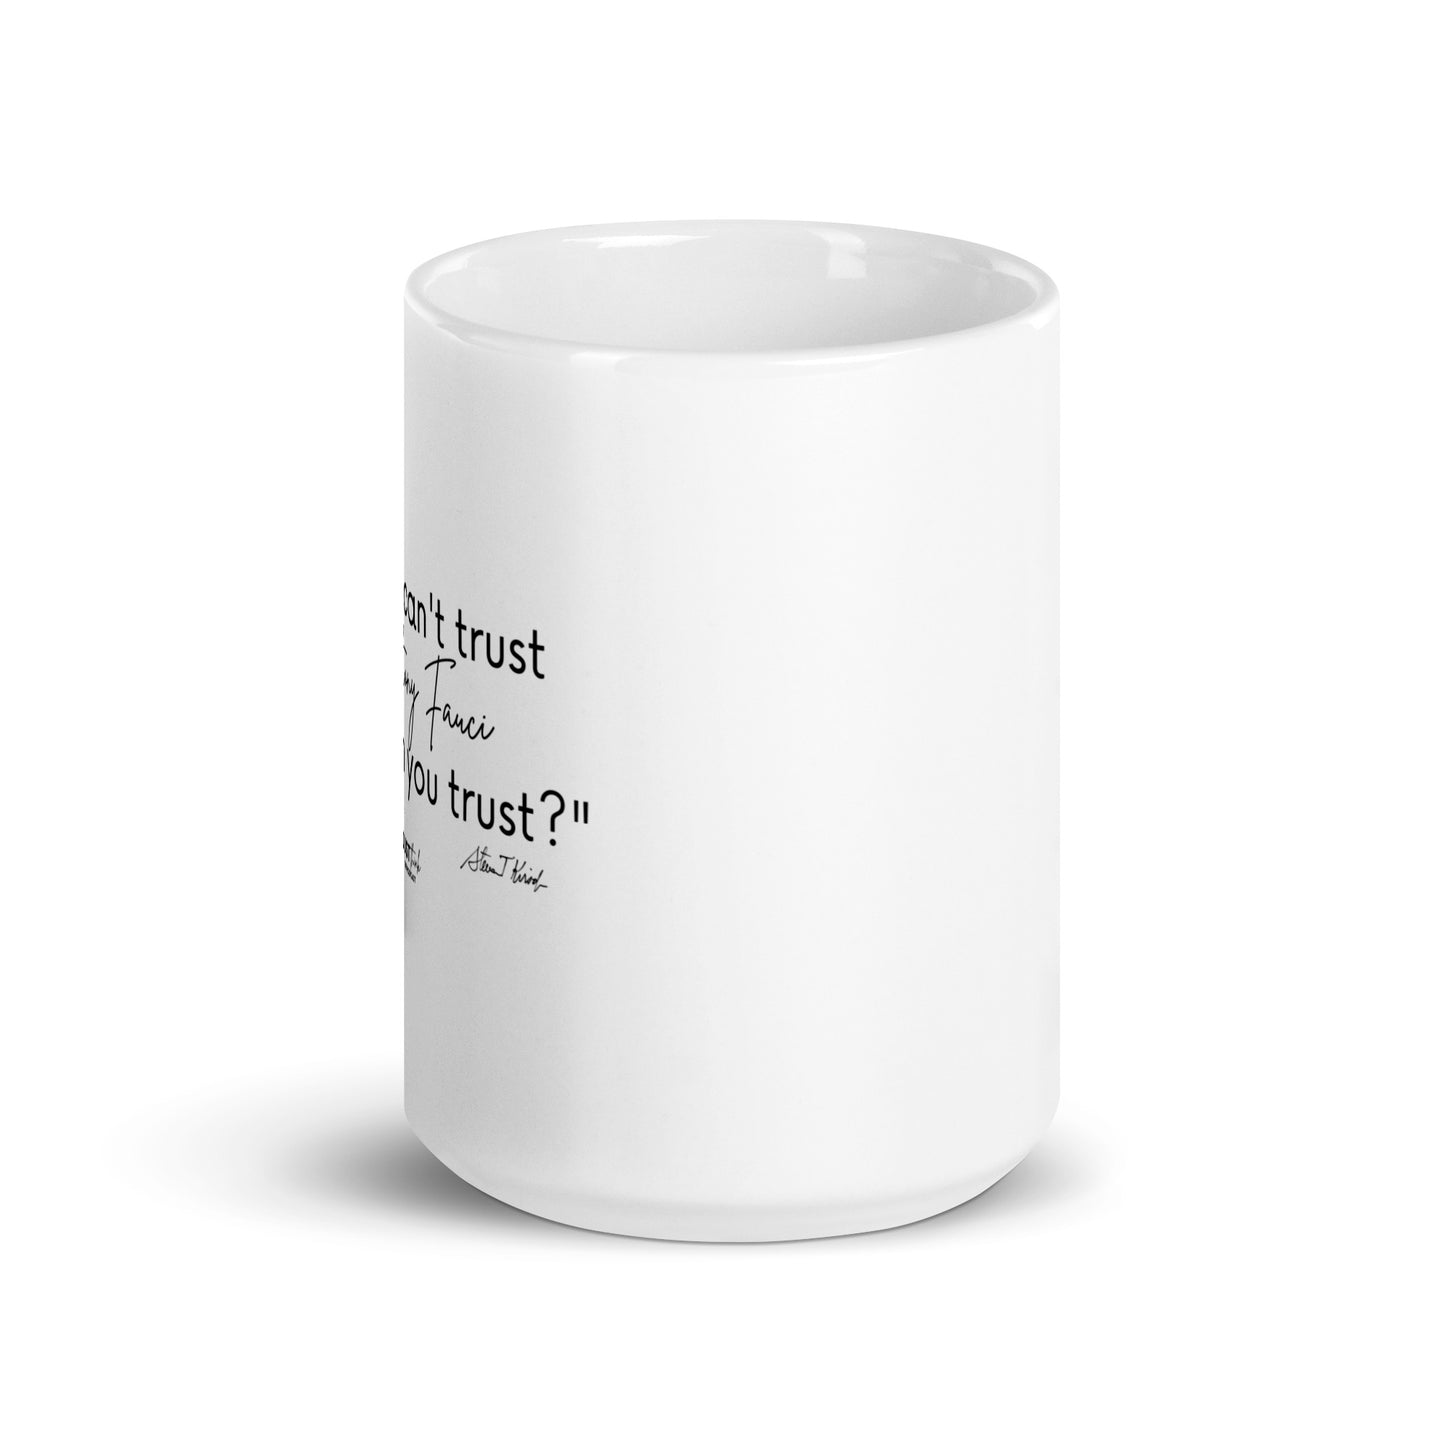 Steve Kirsch Quote - White glossy mug